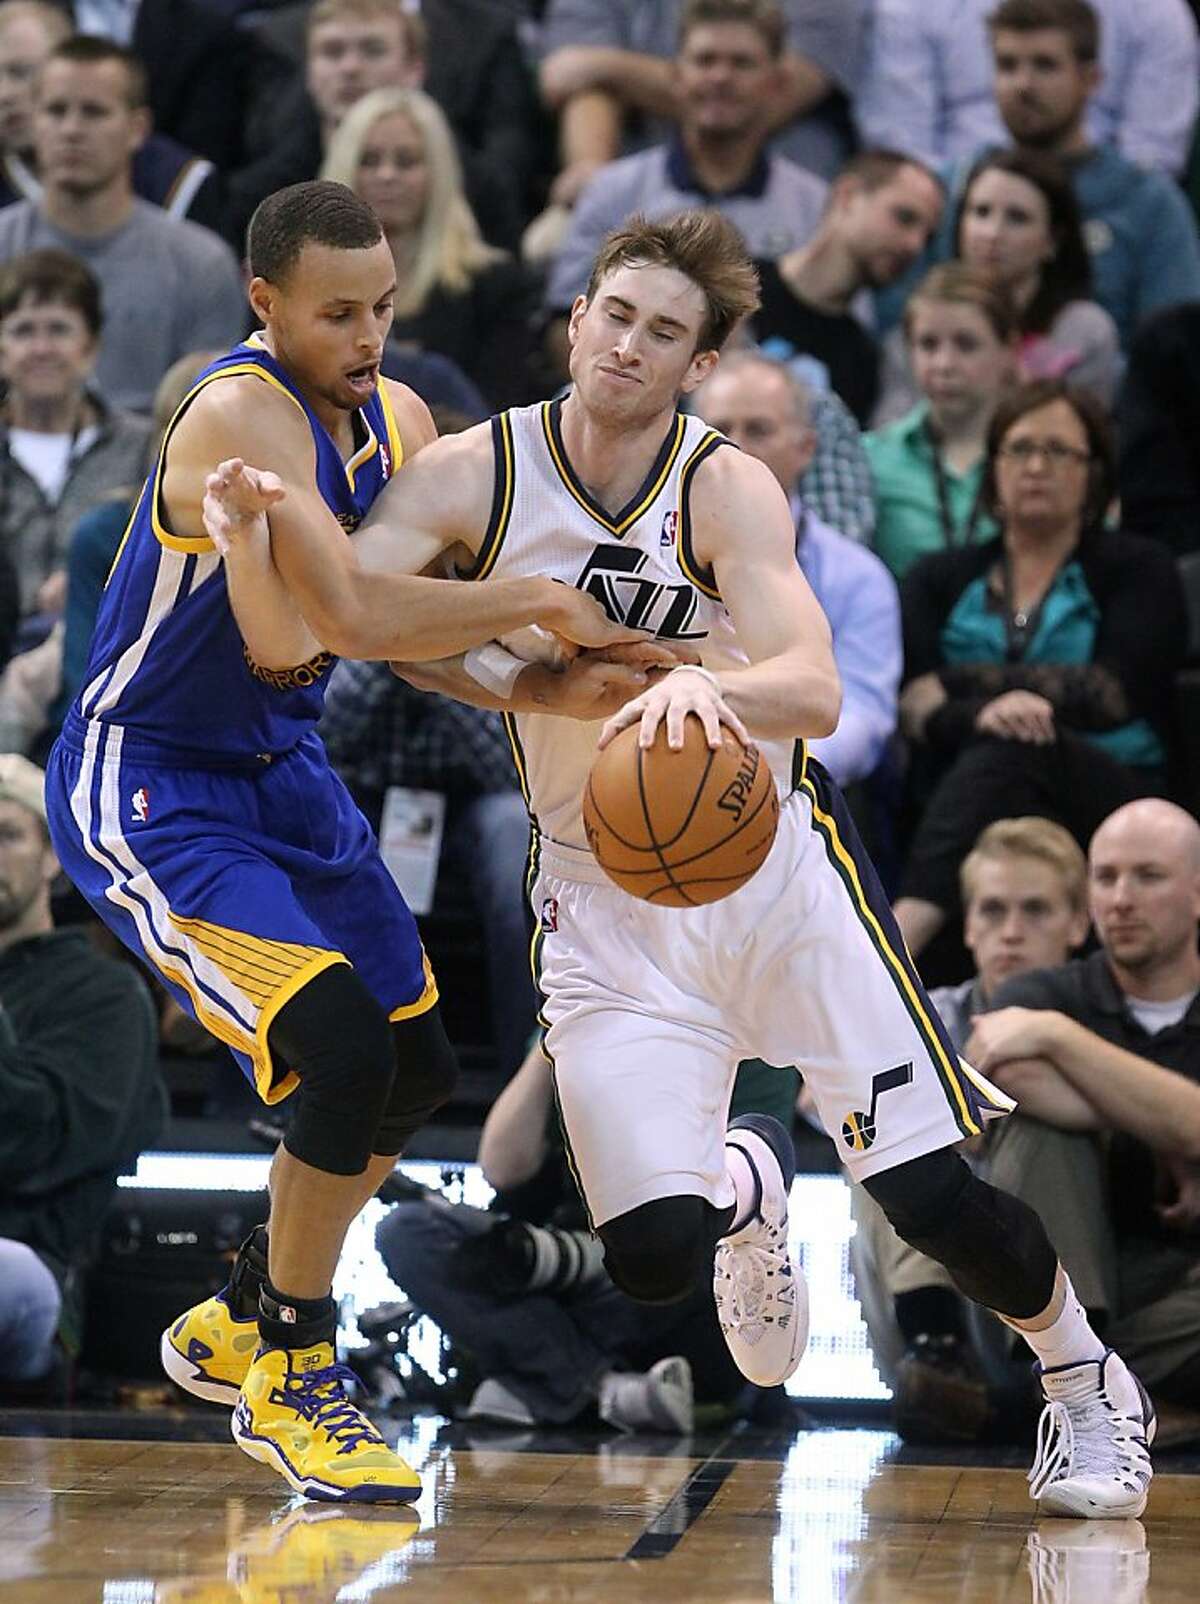 Golden State Warriors' Stephen Curry, left, fouls Utah Jazz's Gordon Hayward in the second quarter during an NBA basketball game Monday, Nov. 18, 2013, in Salt Lake City. (AP Photo/Rick Bowmer)